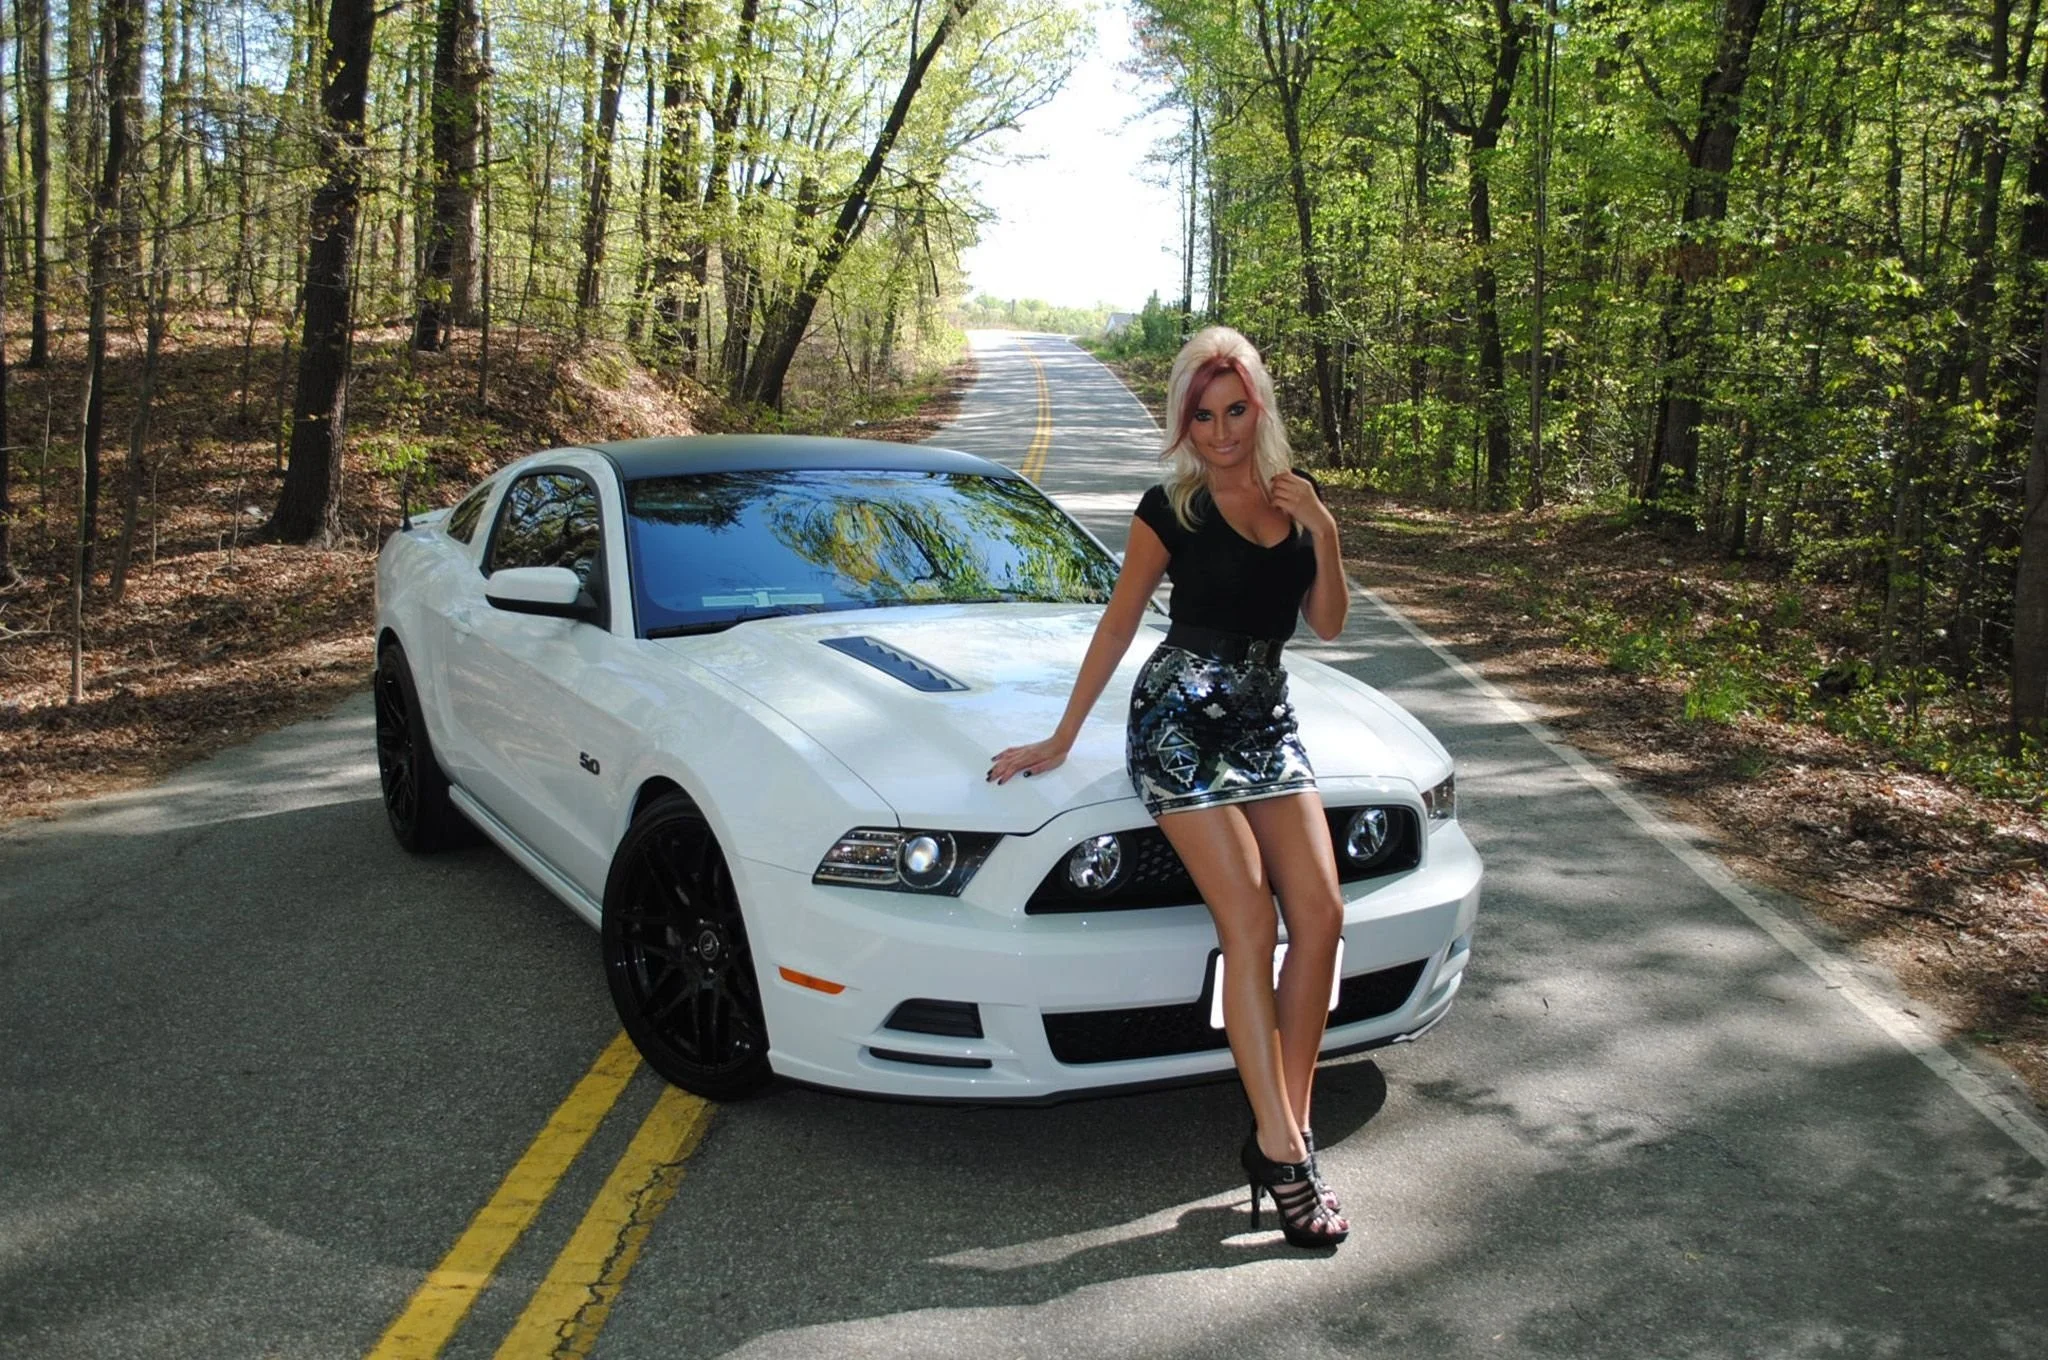 2015 Ford Mustang Supercar Superstreet Ashley Arrington Babe Girl Blondie USA 02 wallpaper 795708 WallpaperUP